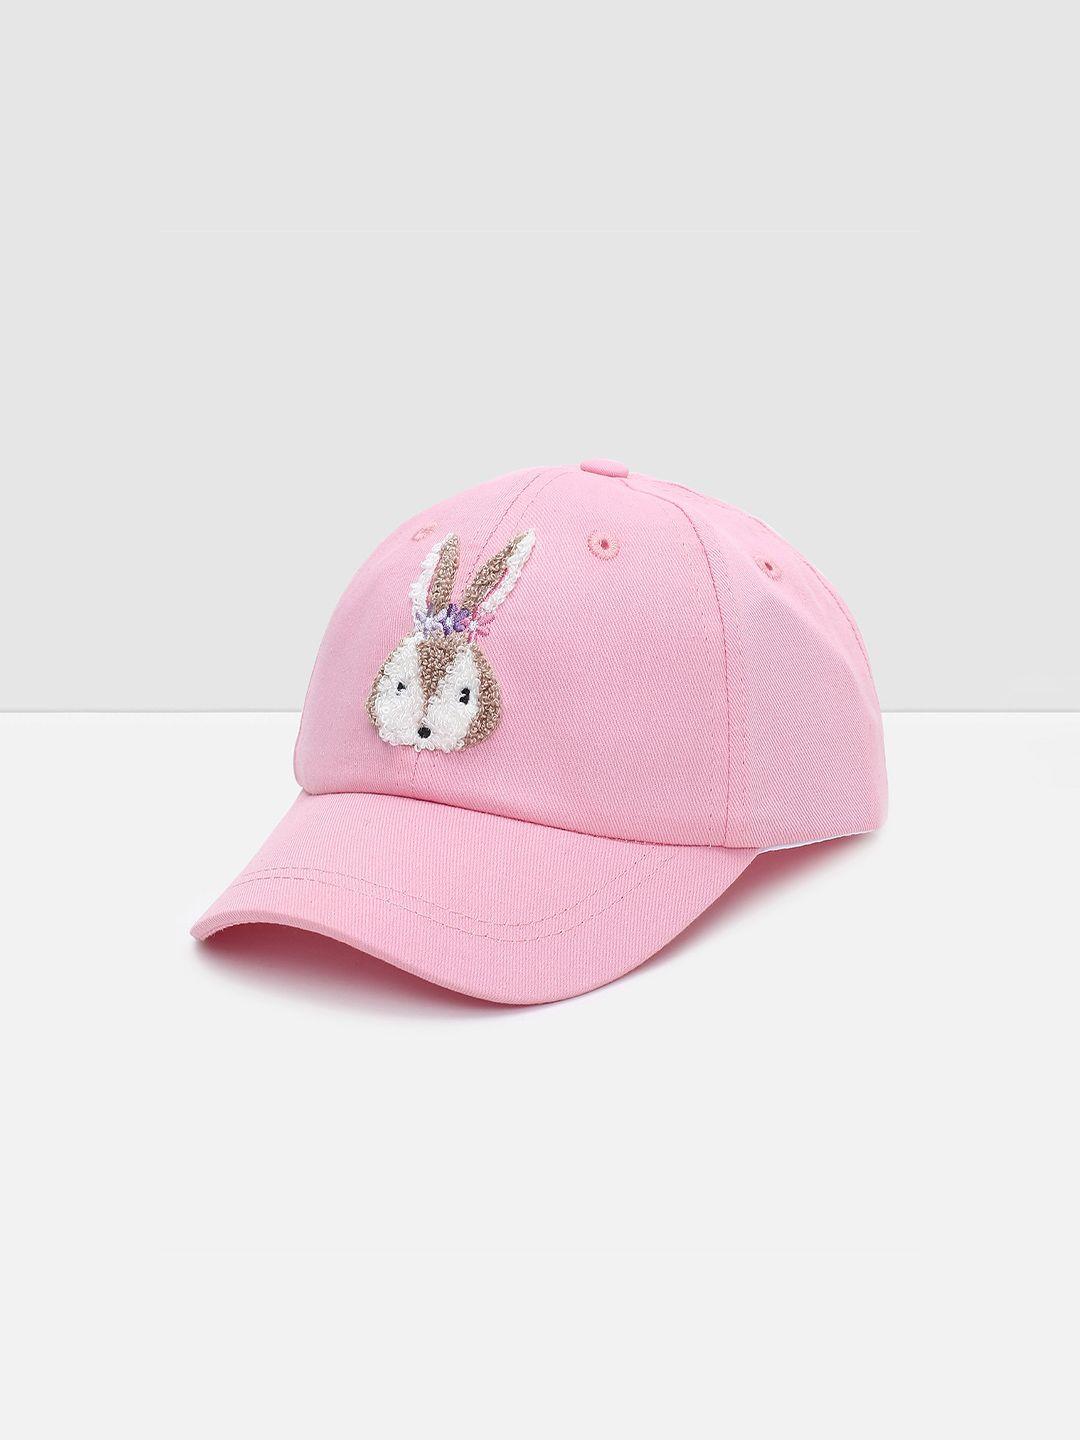 max girls embroidered baseball cap